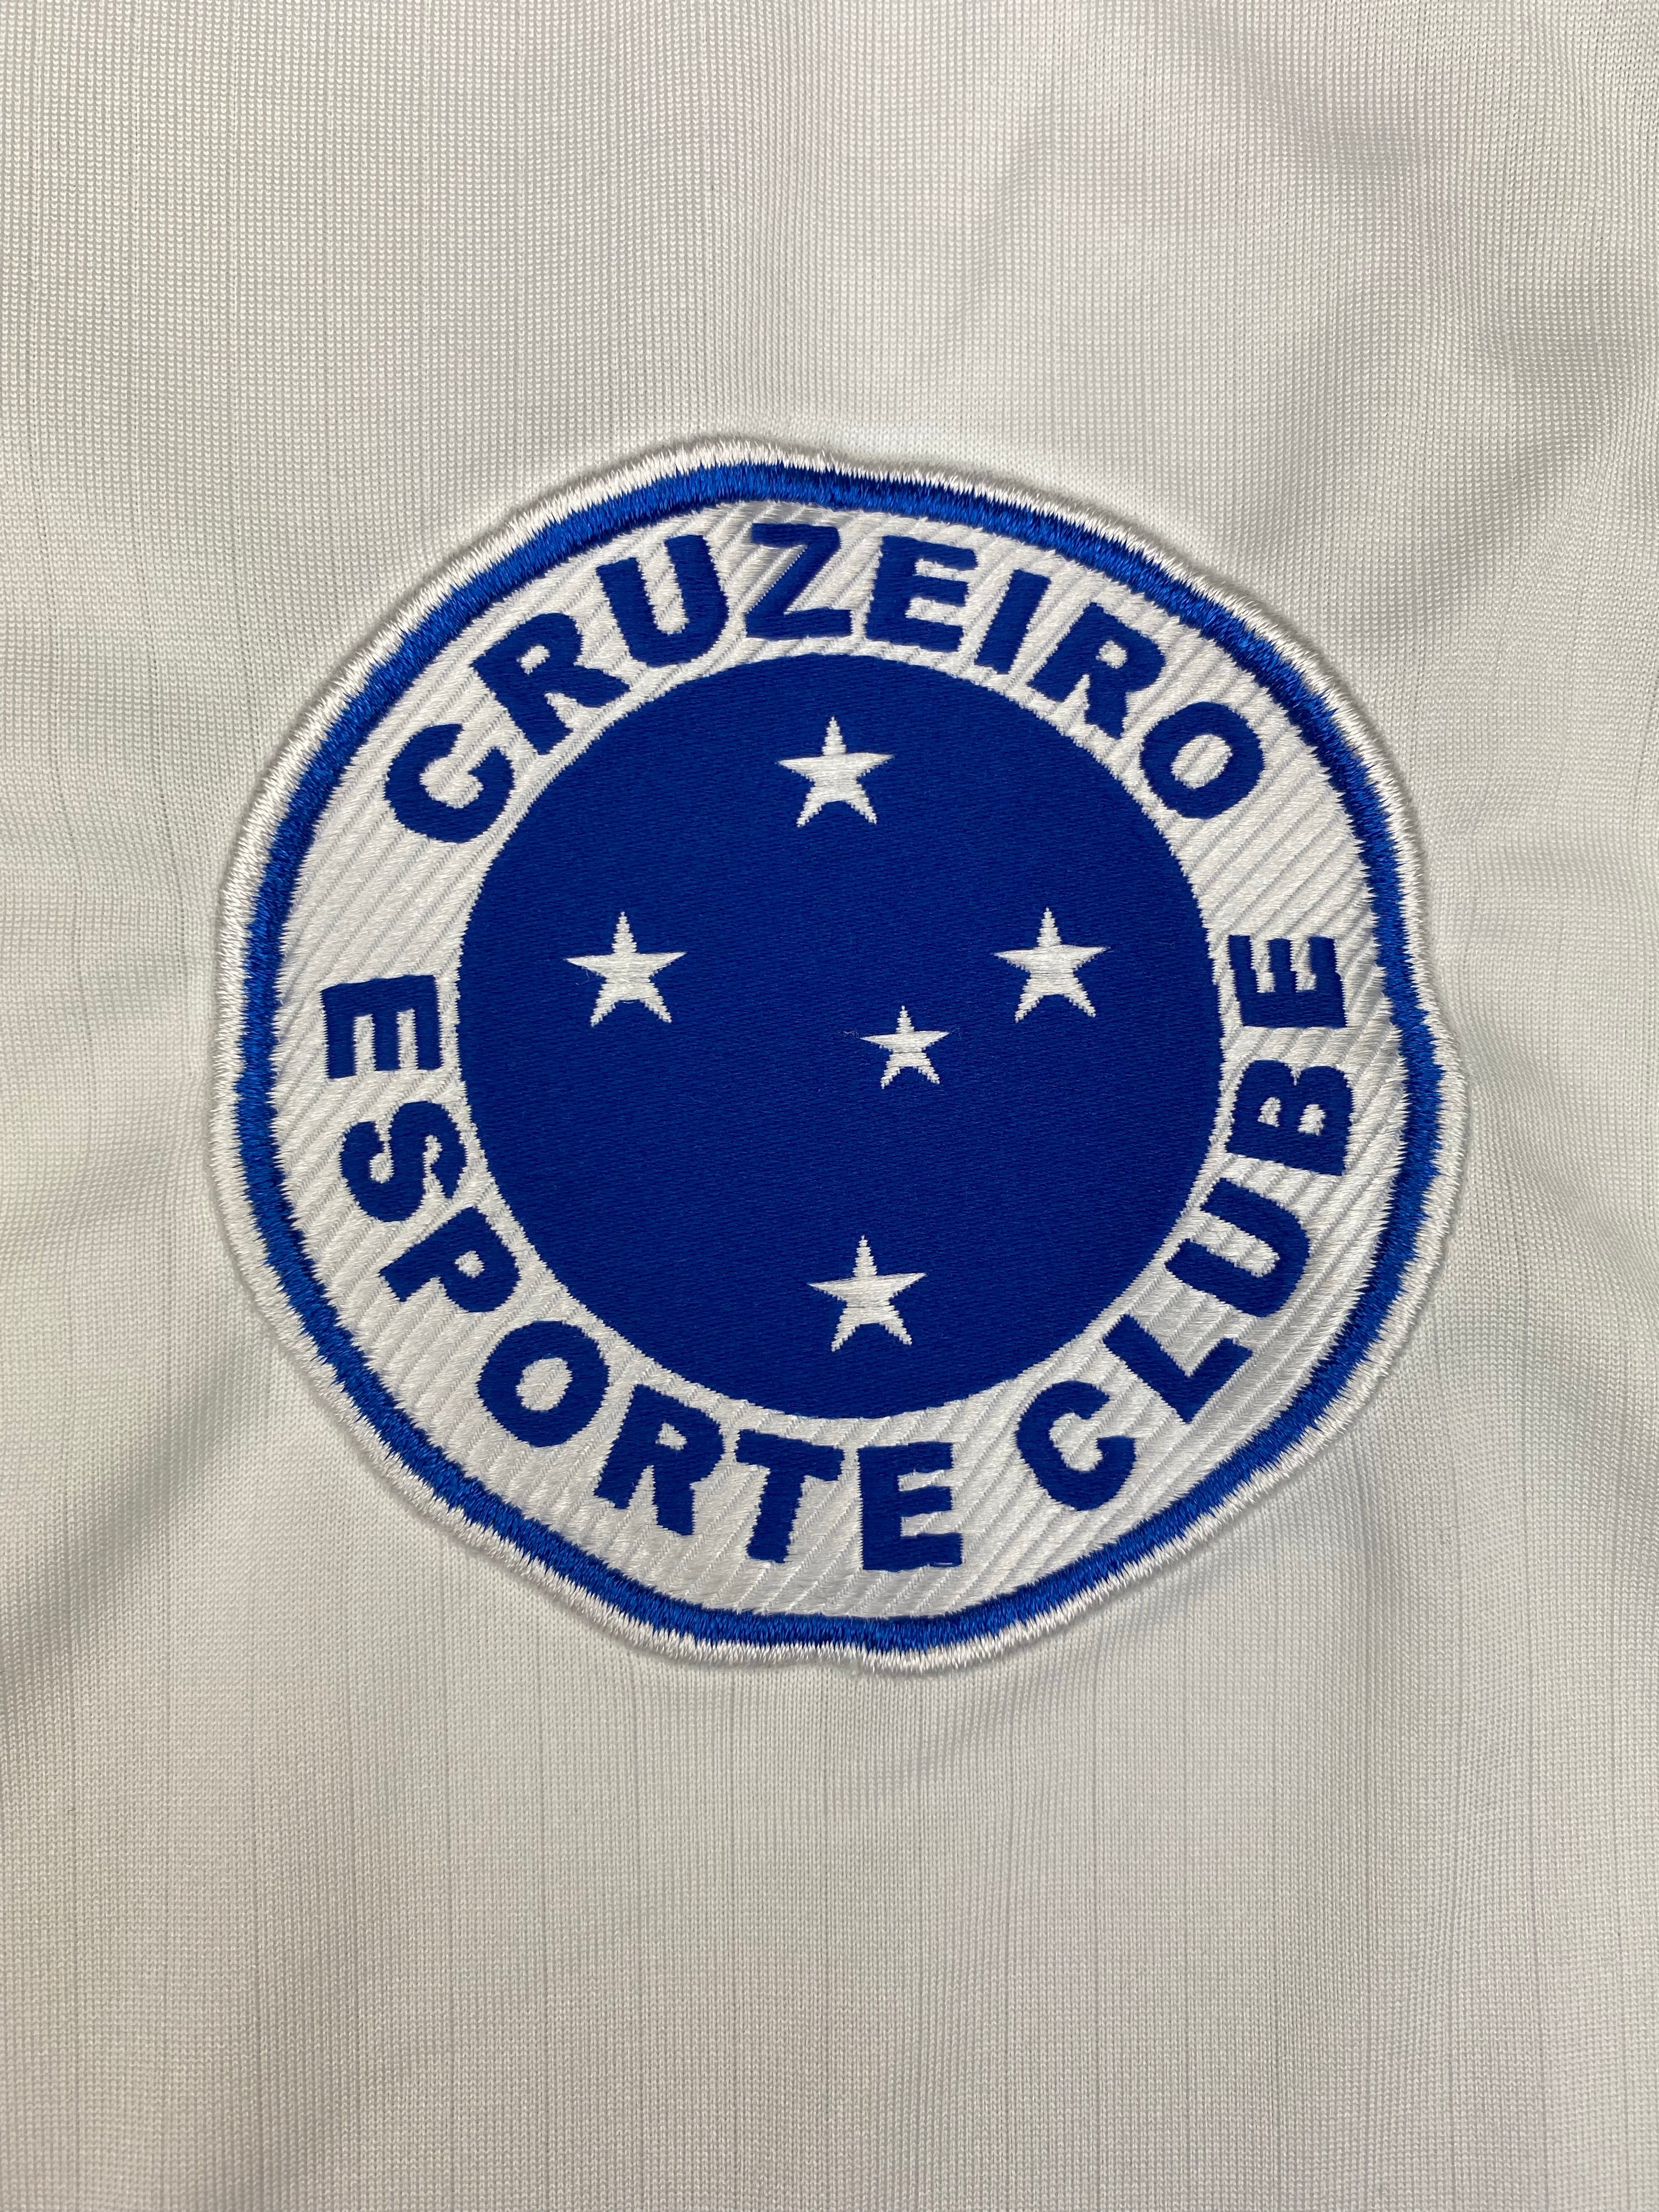 2011 Cruzeiro Away Shirt #10 (M) 7.5/10